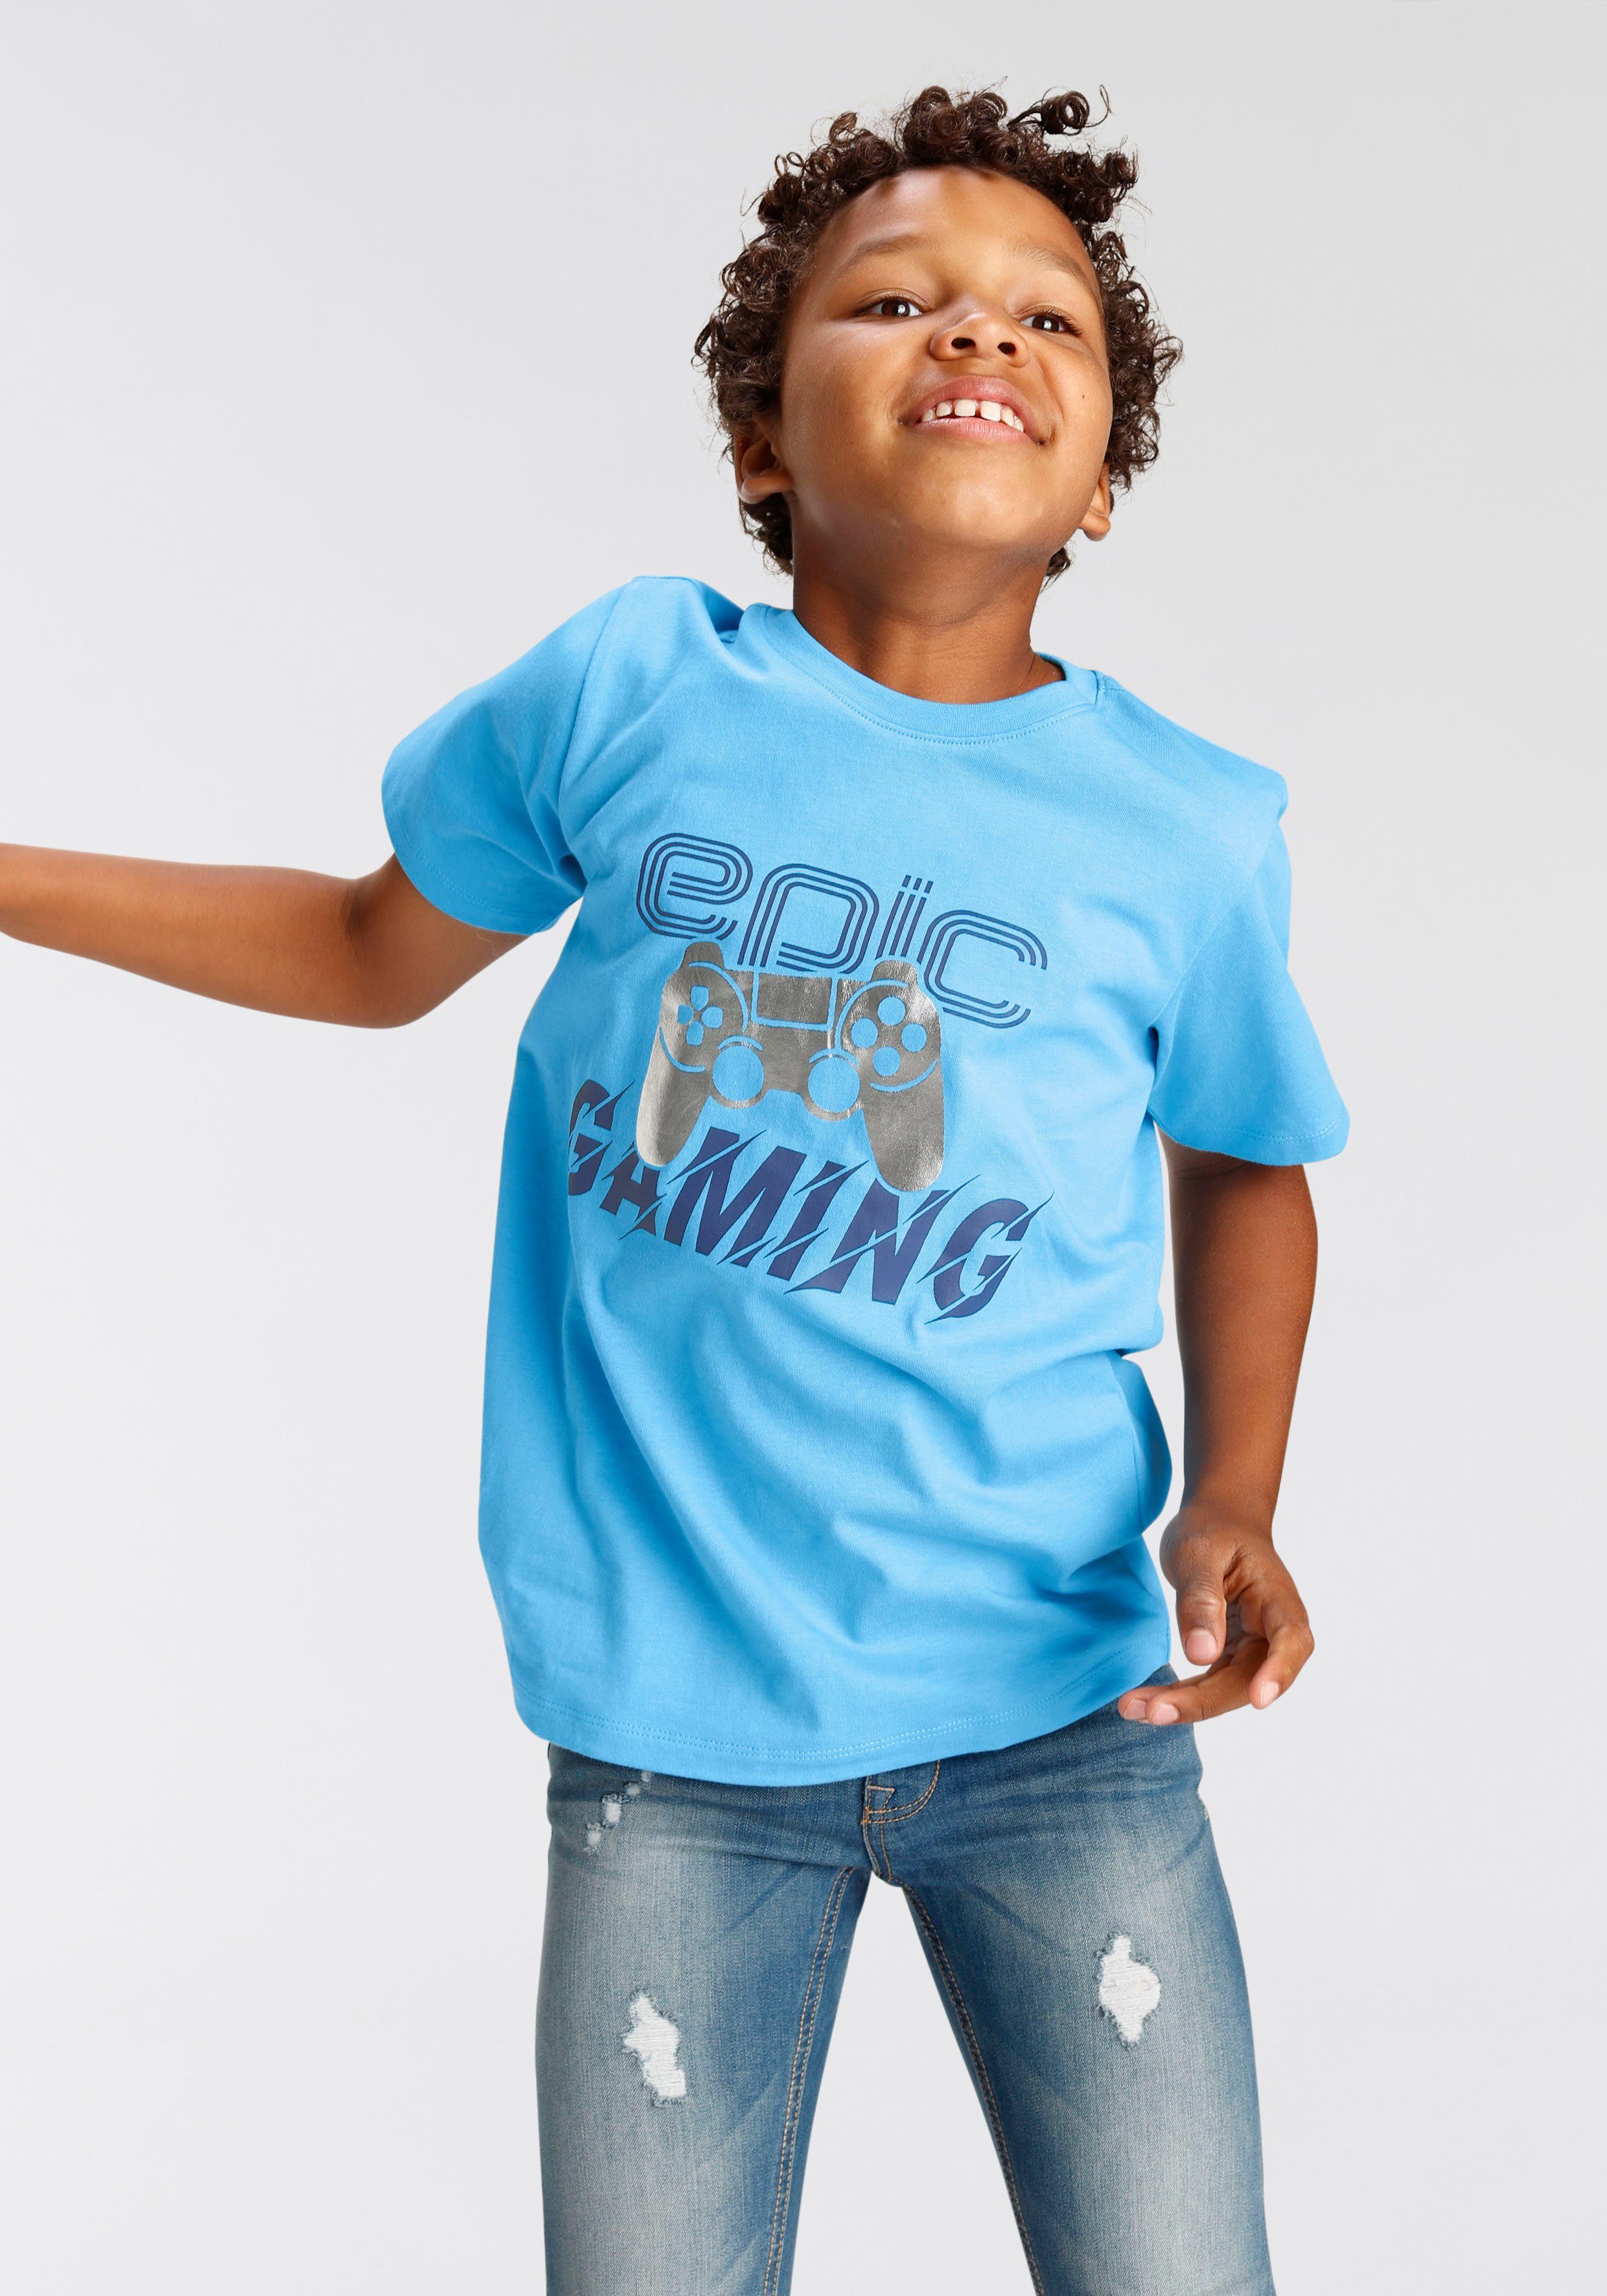 EPIC GAMING KIDSWORLD Folienprint T-Shirt